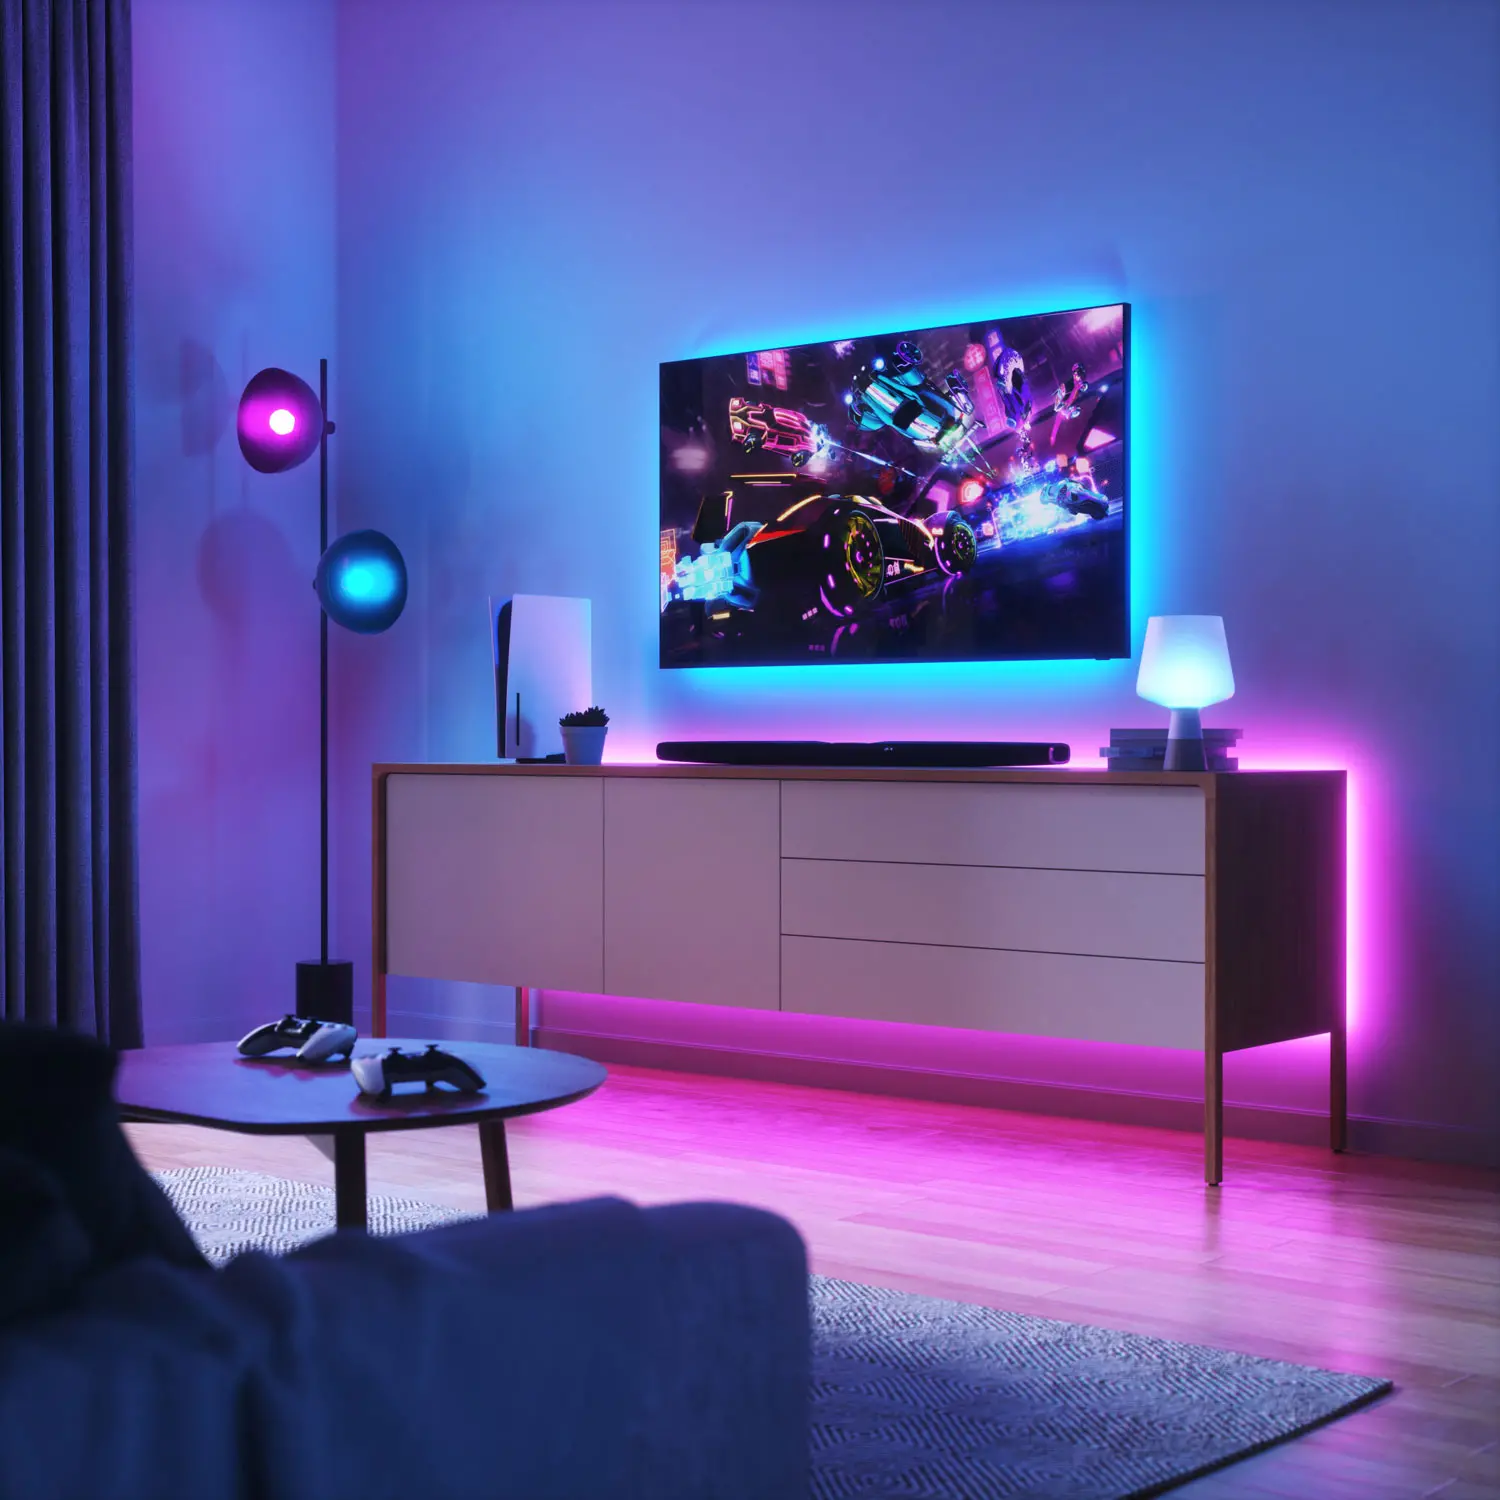 Smart lights in living room